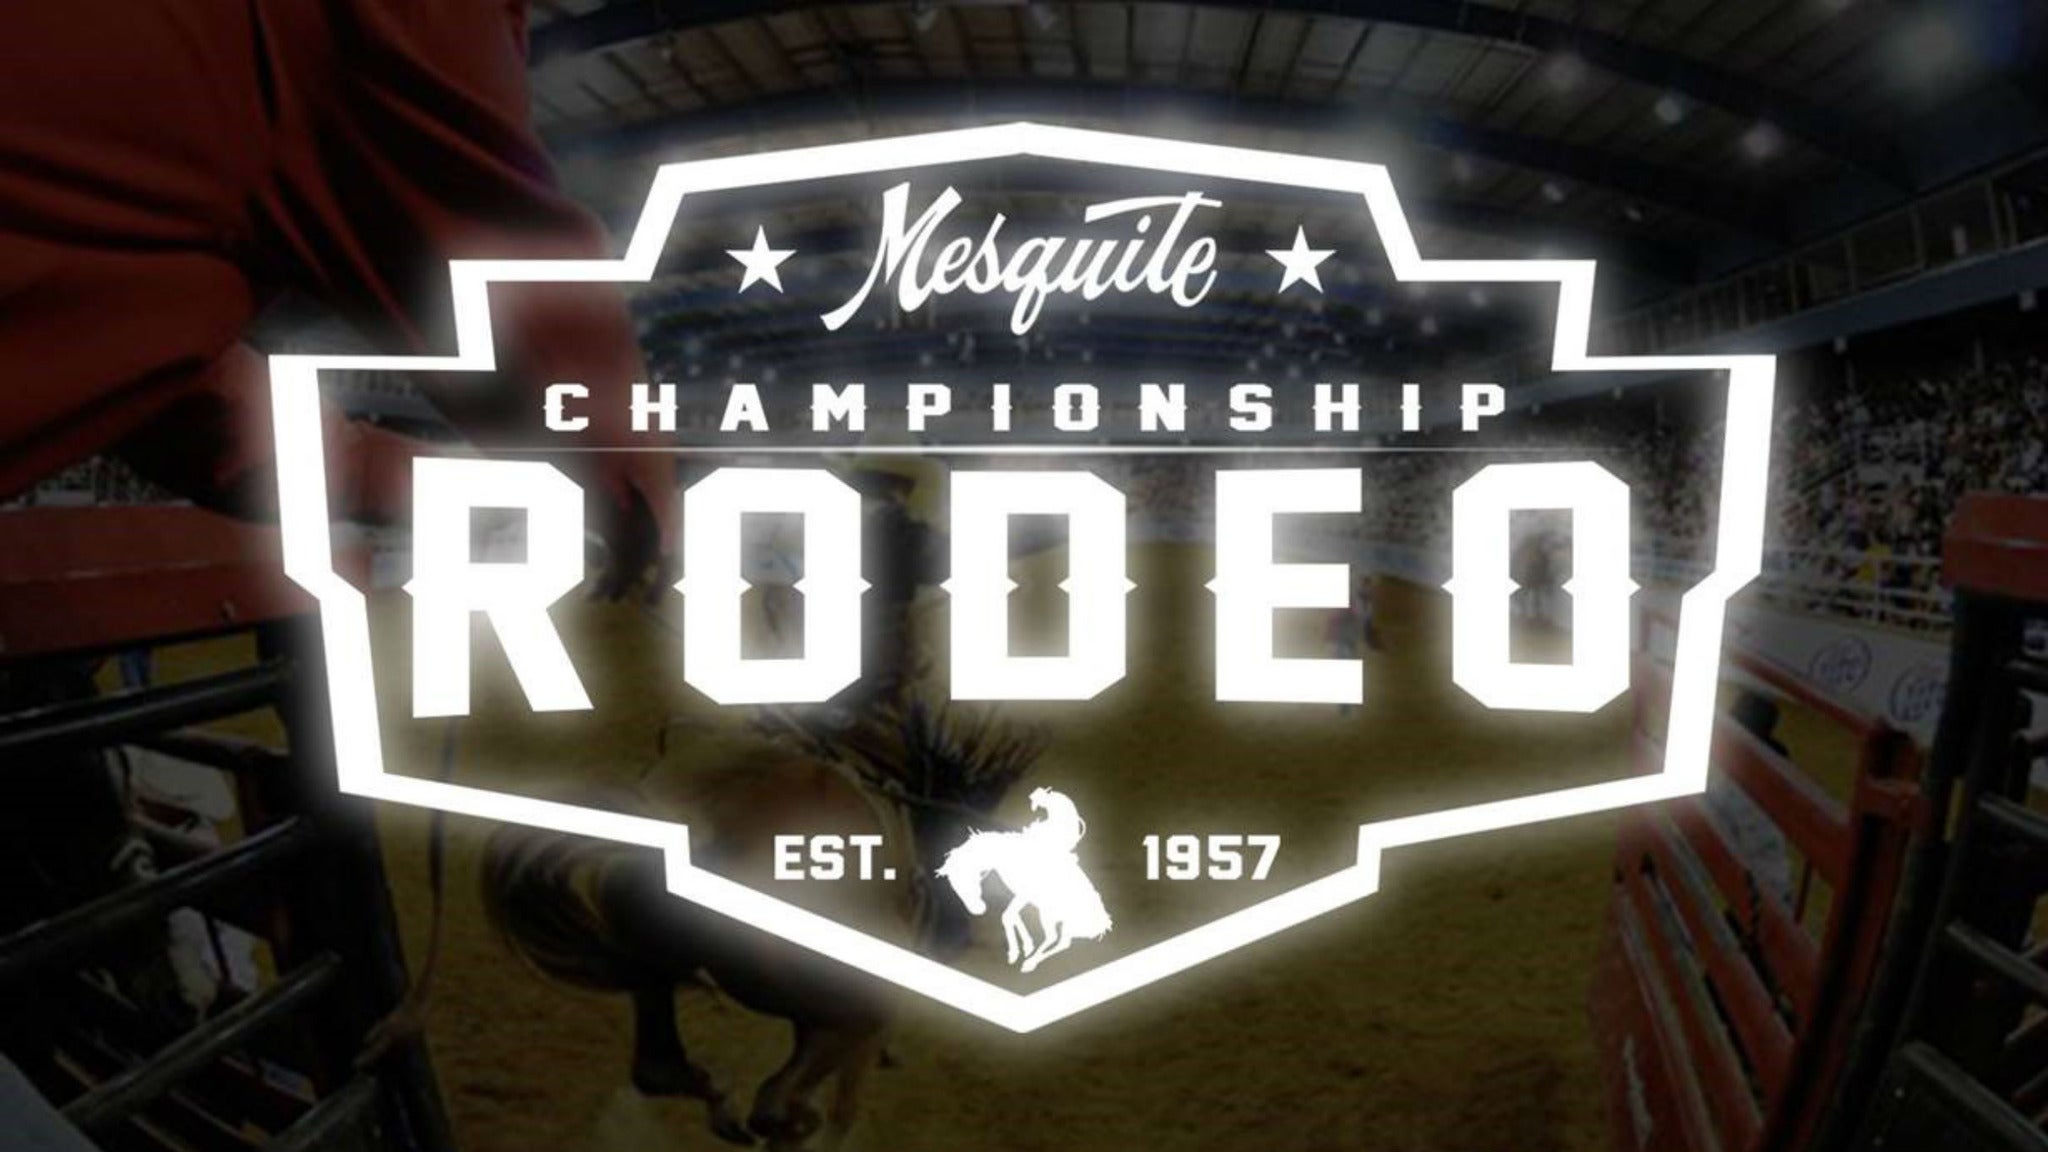 Mesquite Championship Rodeo presale information on freepresalepasswords.com